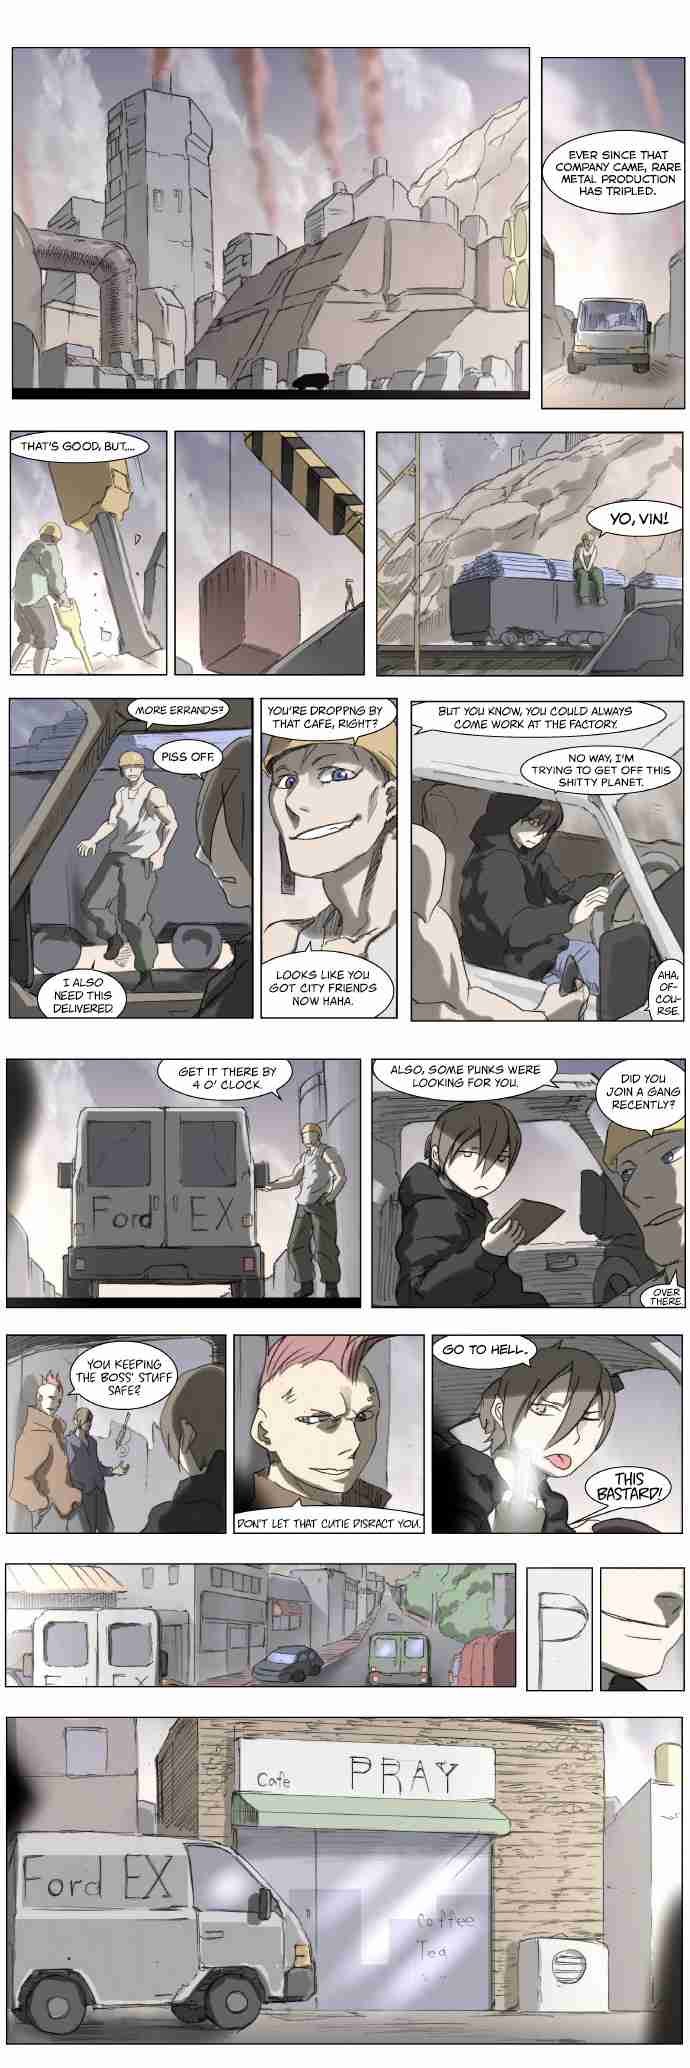 Knight Run Vol. 3 Ch. 175 Hero Part 6 | Yggdrasil